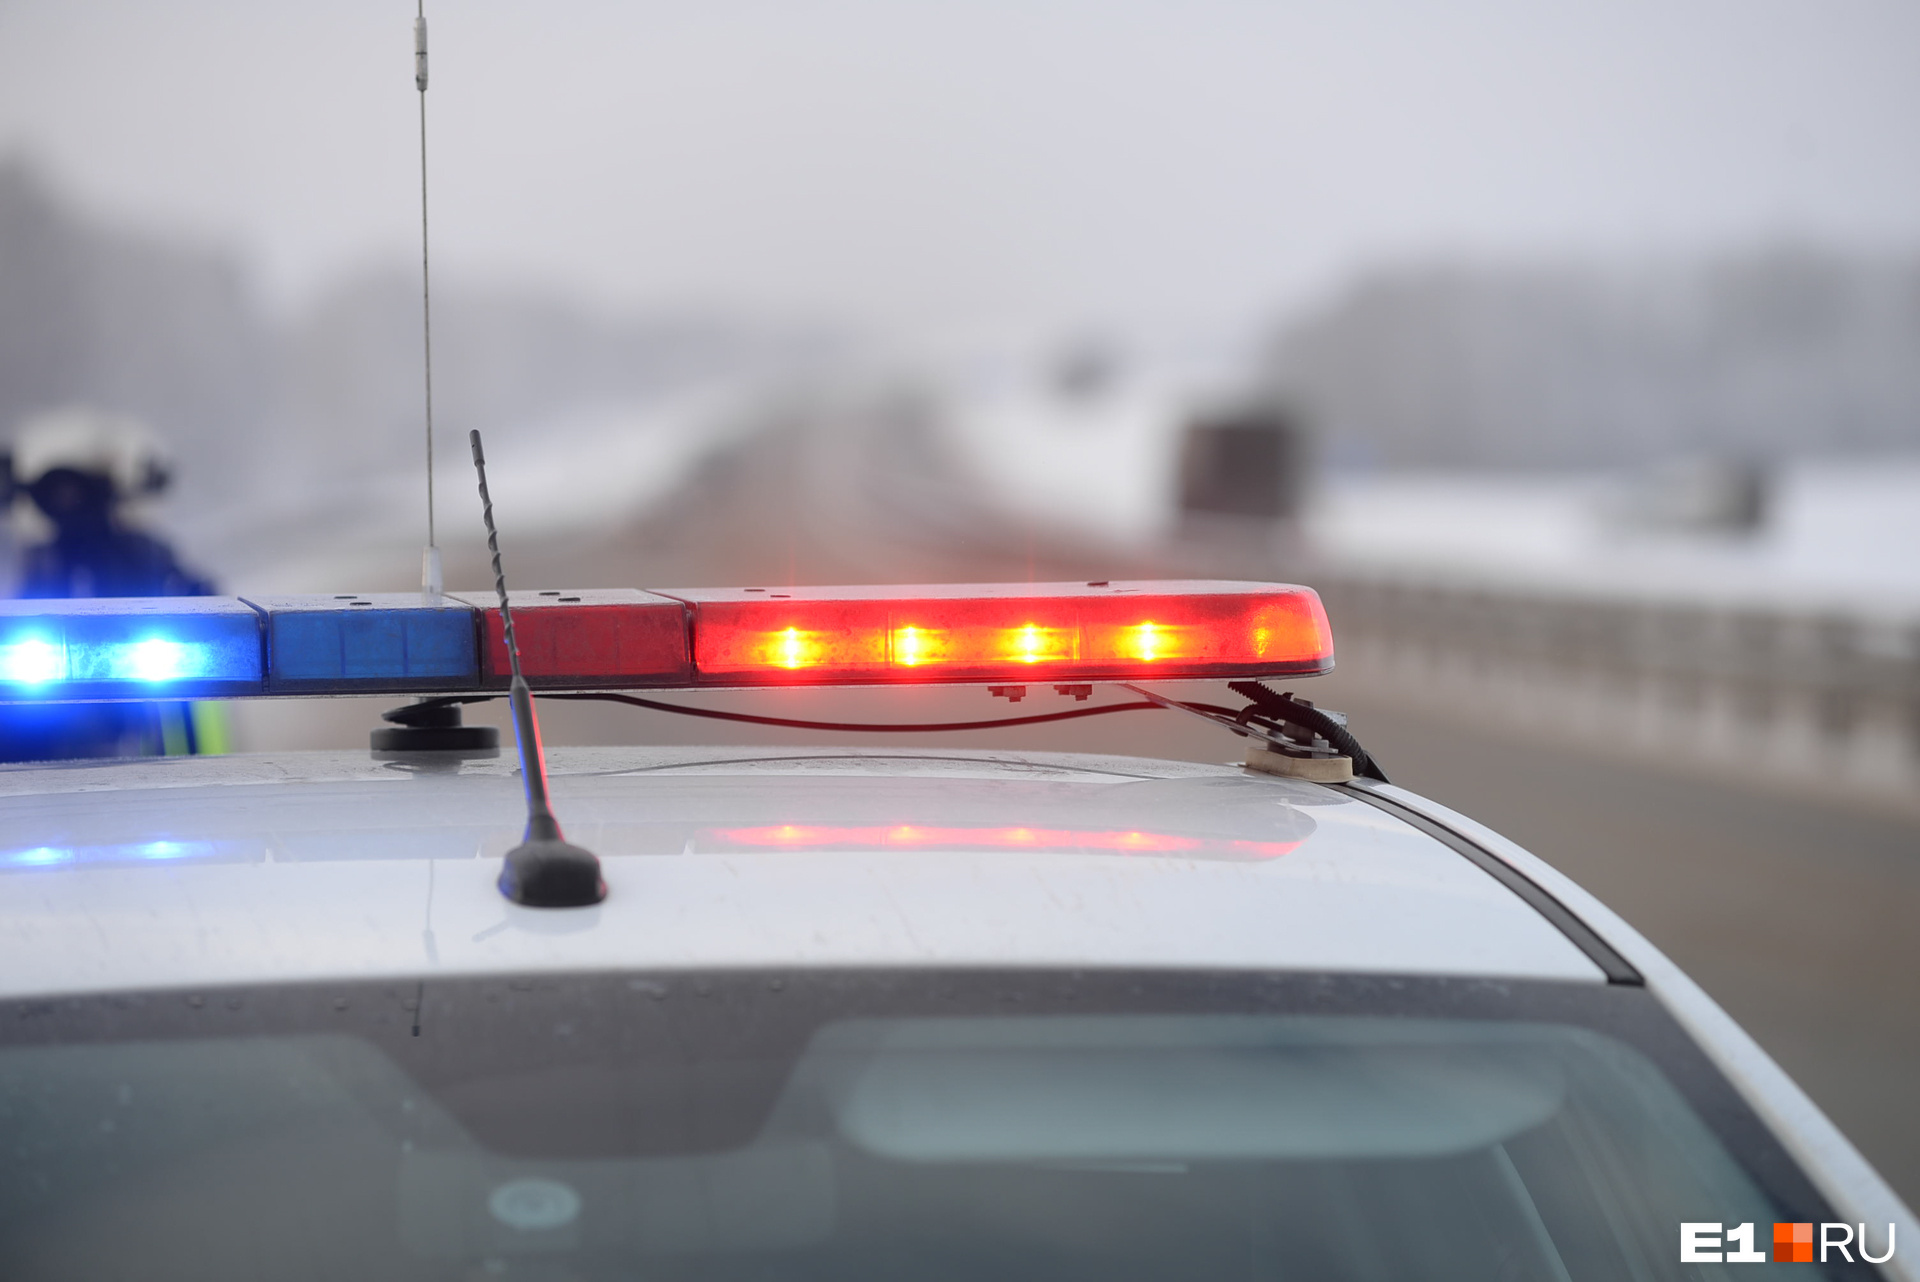 Полиция задержала автохама без прав и документов на машину в Иркутске